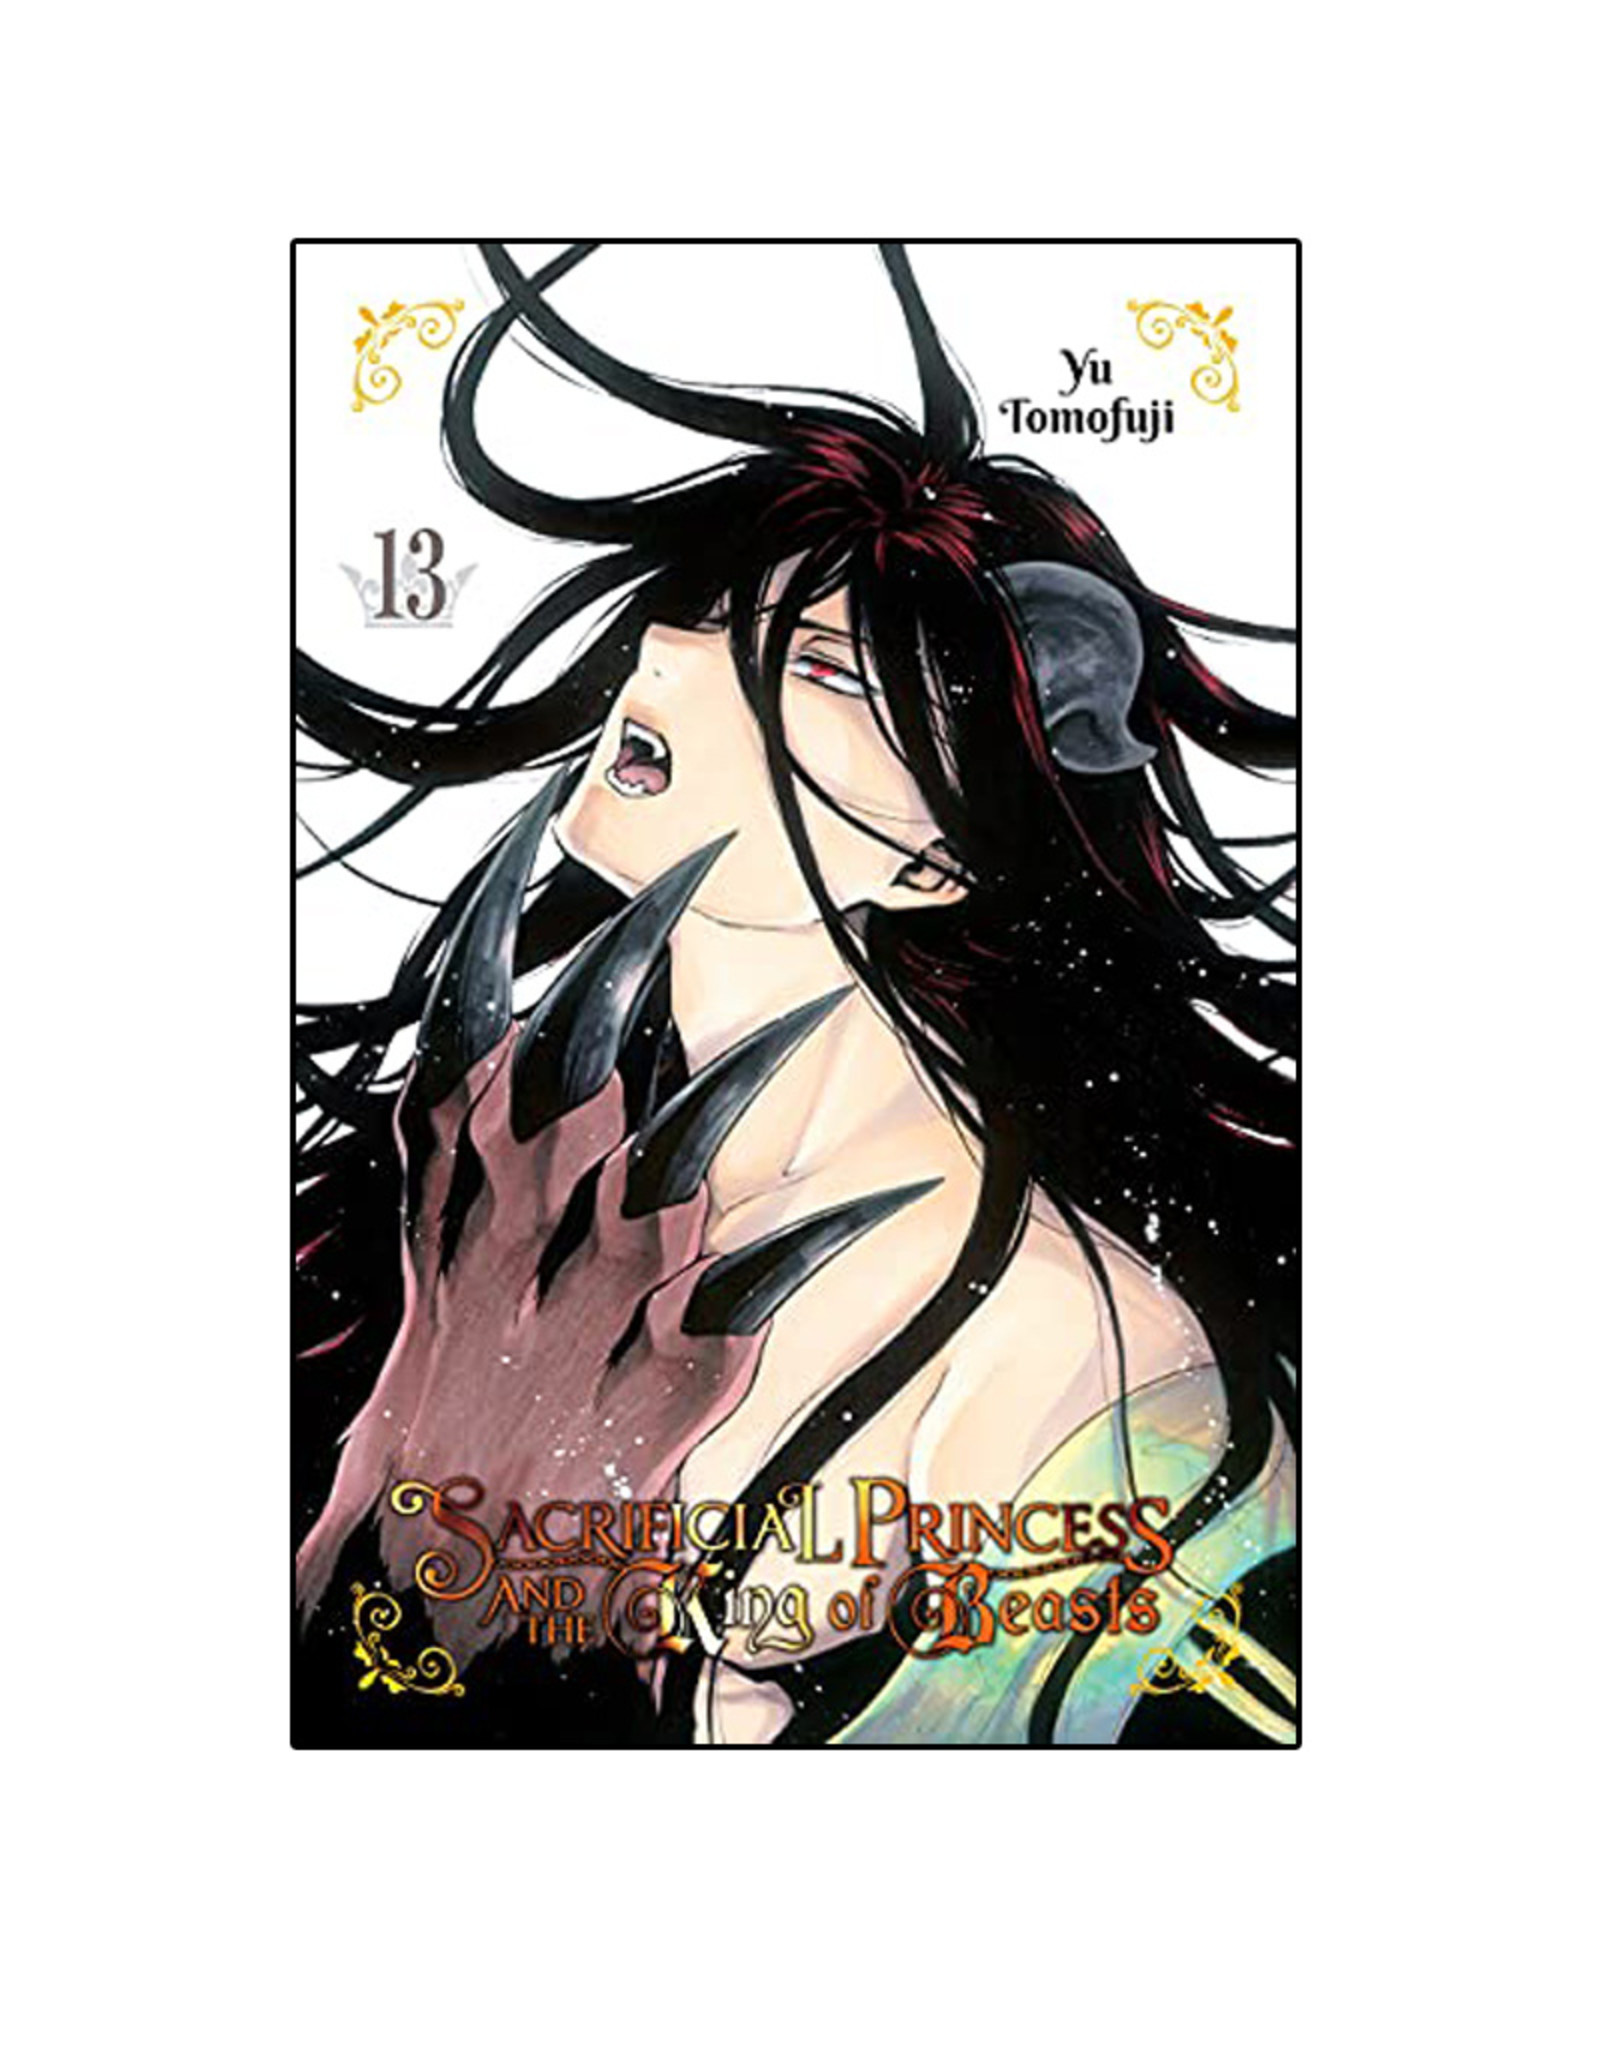 Yen Press *USED* Sacrificial Princess & King of Beasts Volume 13